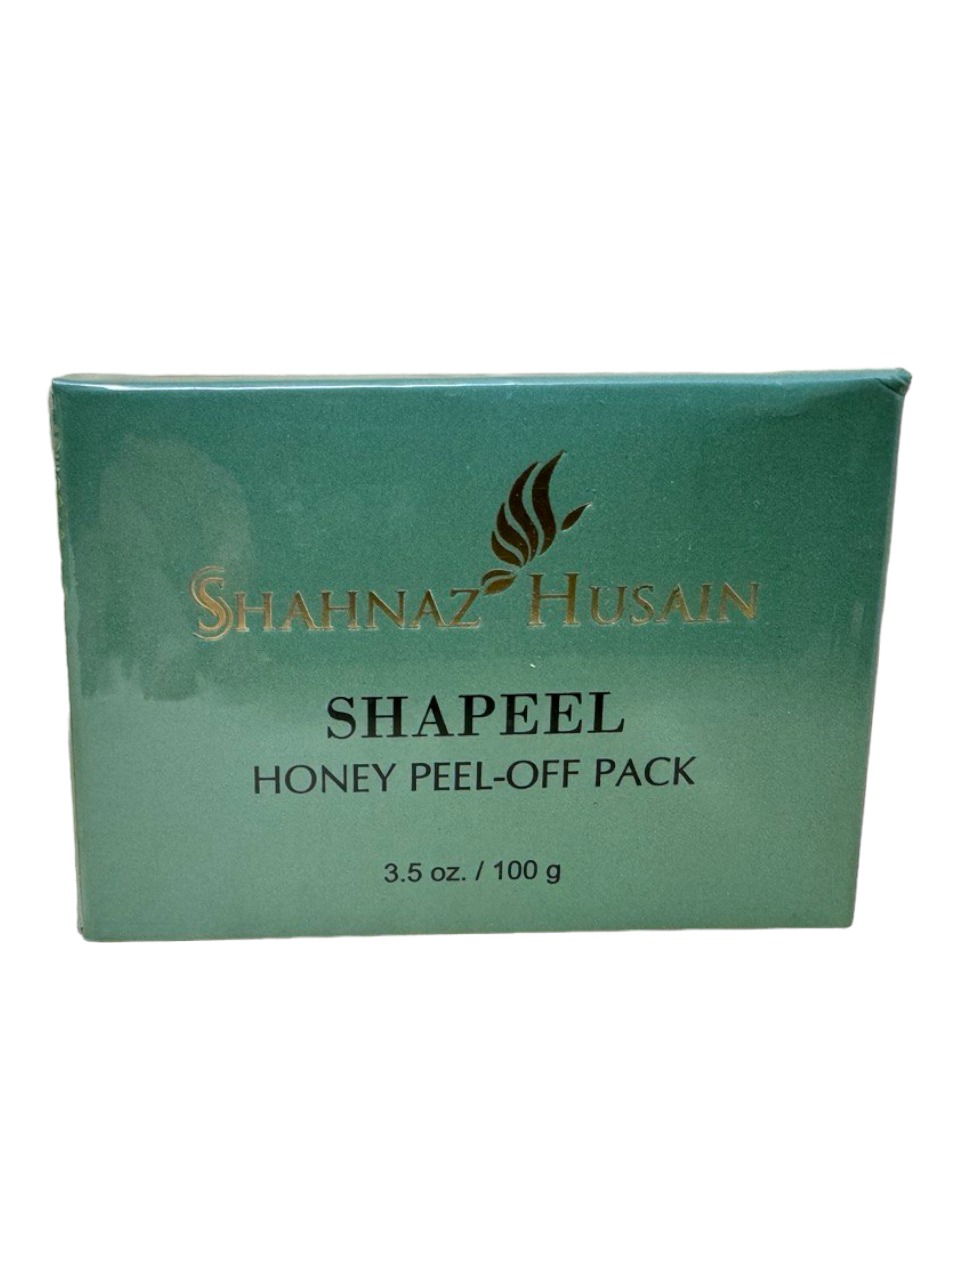 Shahnaz Husain Shapeel Honey Peel Off Pack